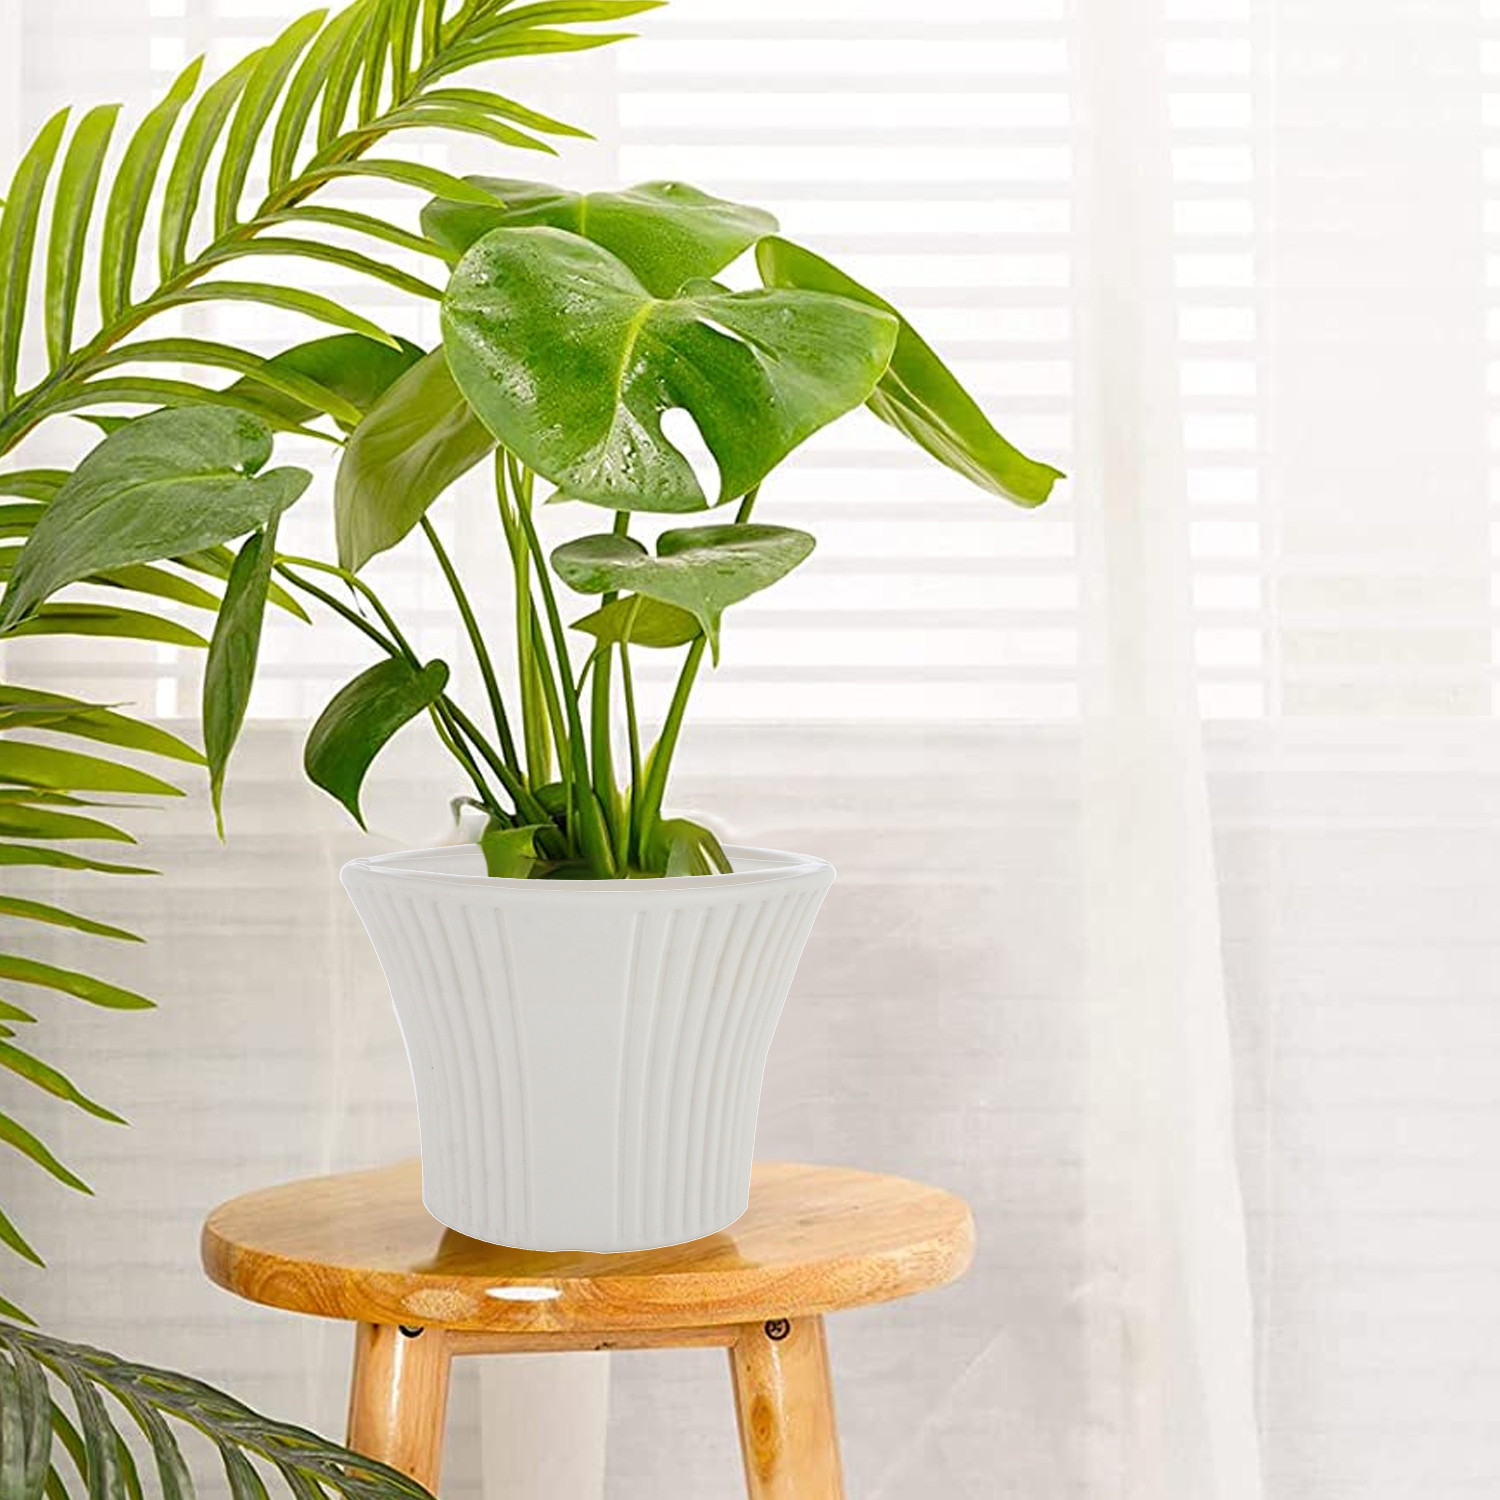 Kuber Industries Sunshine Flower Pot|Durable Plastic Flower Pots|Planters for Home Décor|Garden|Living Room|Balcony|8 Inch (White)